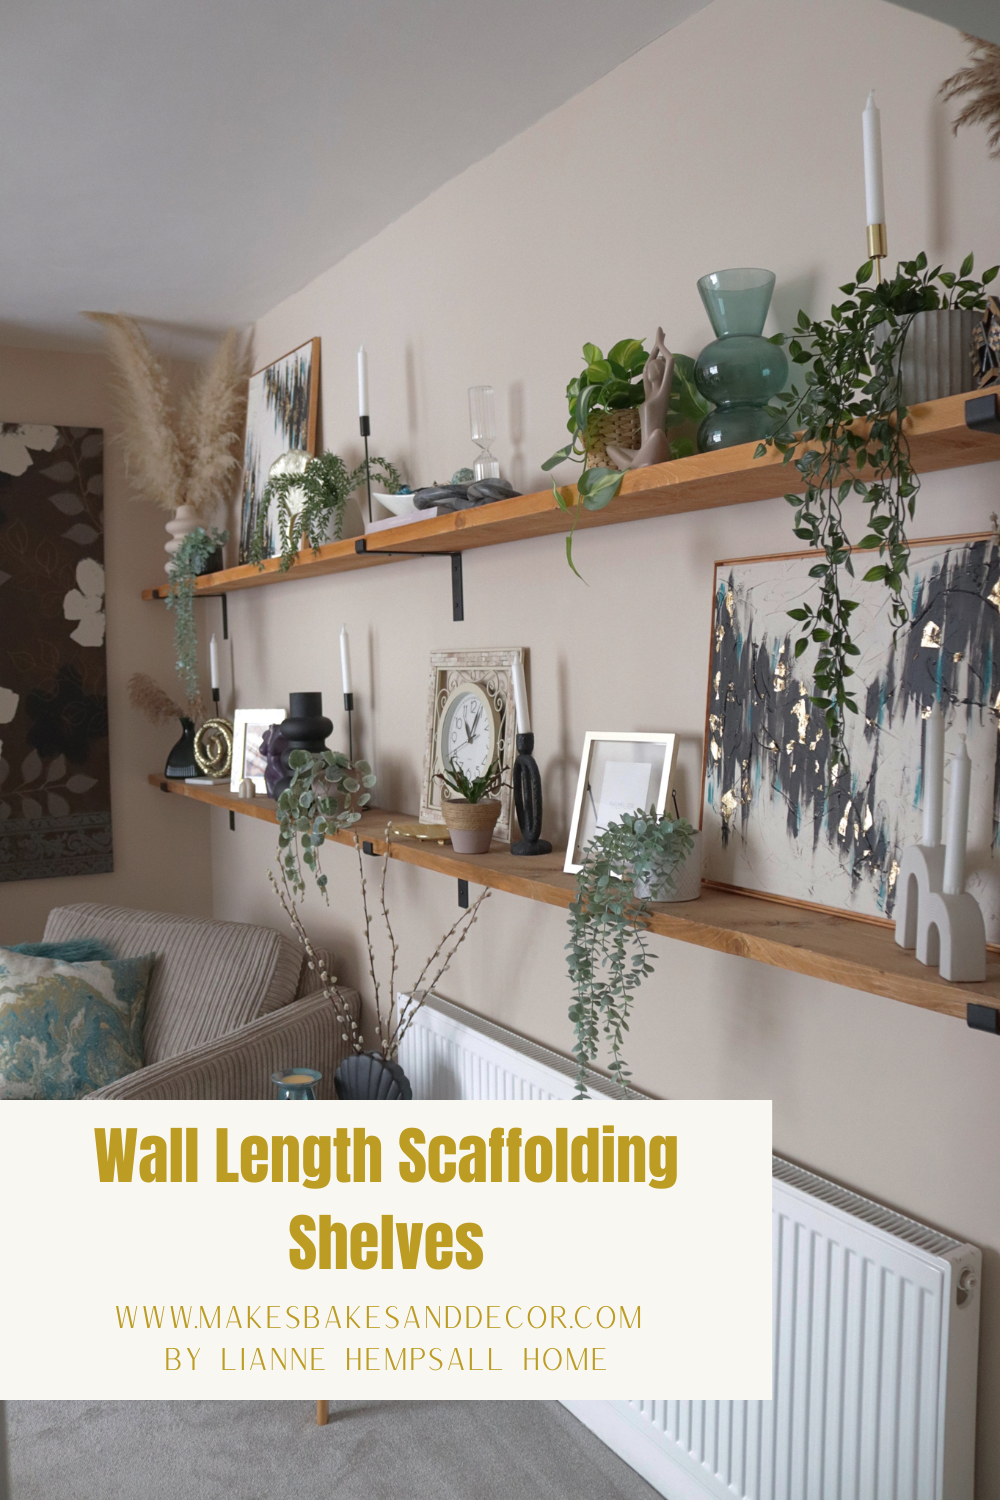 WALL length scaffolding shelves
